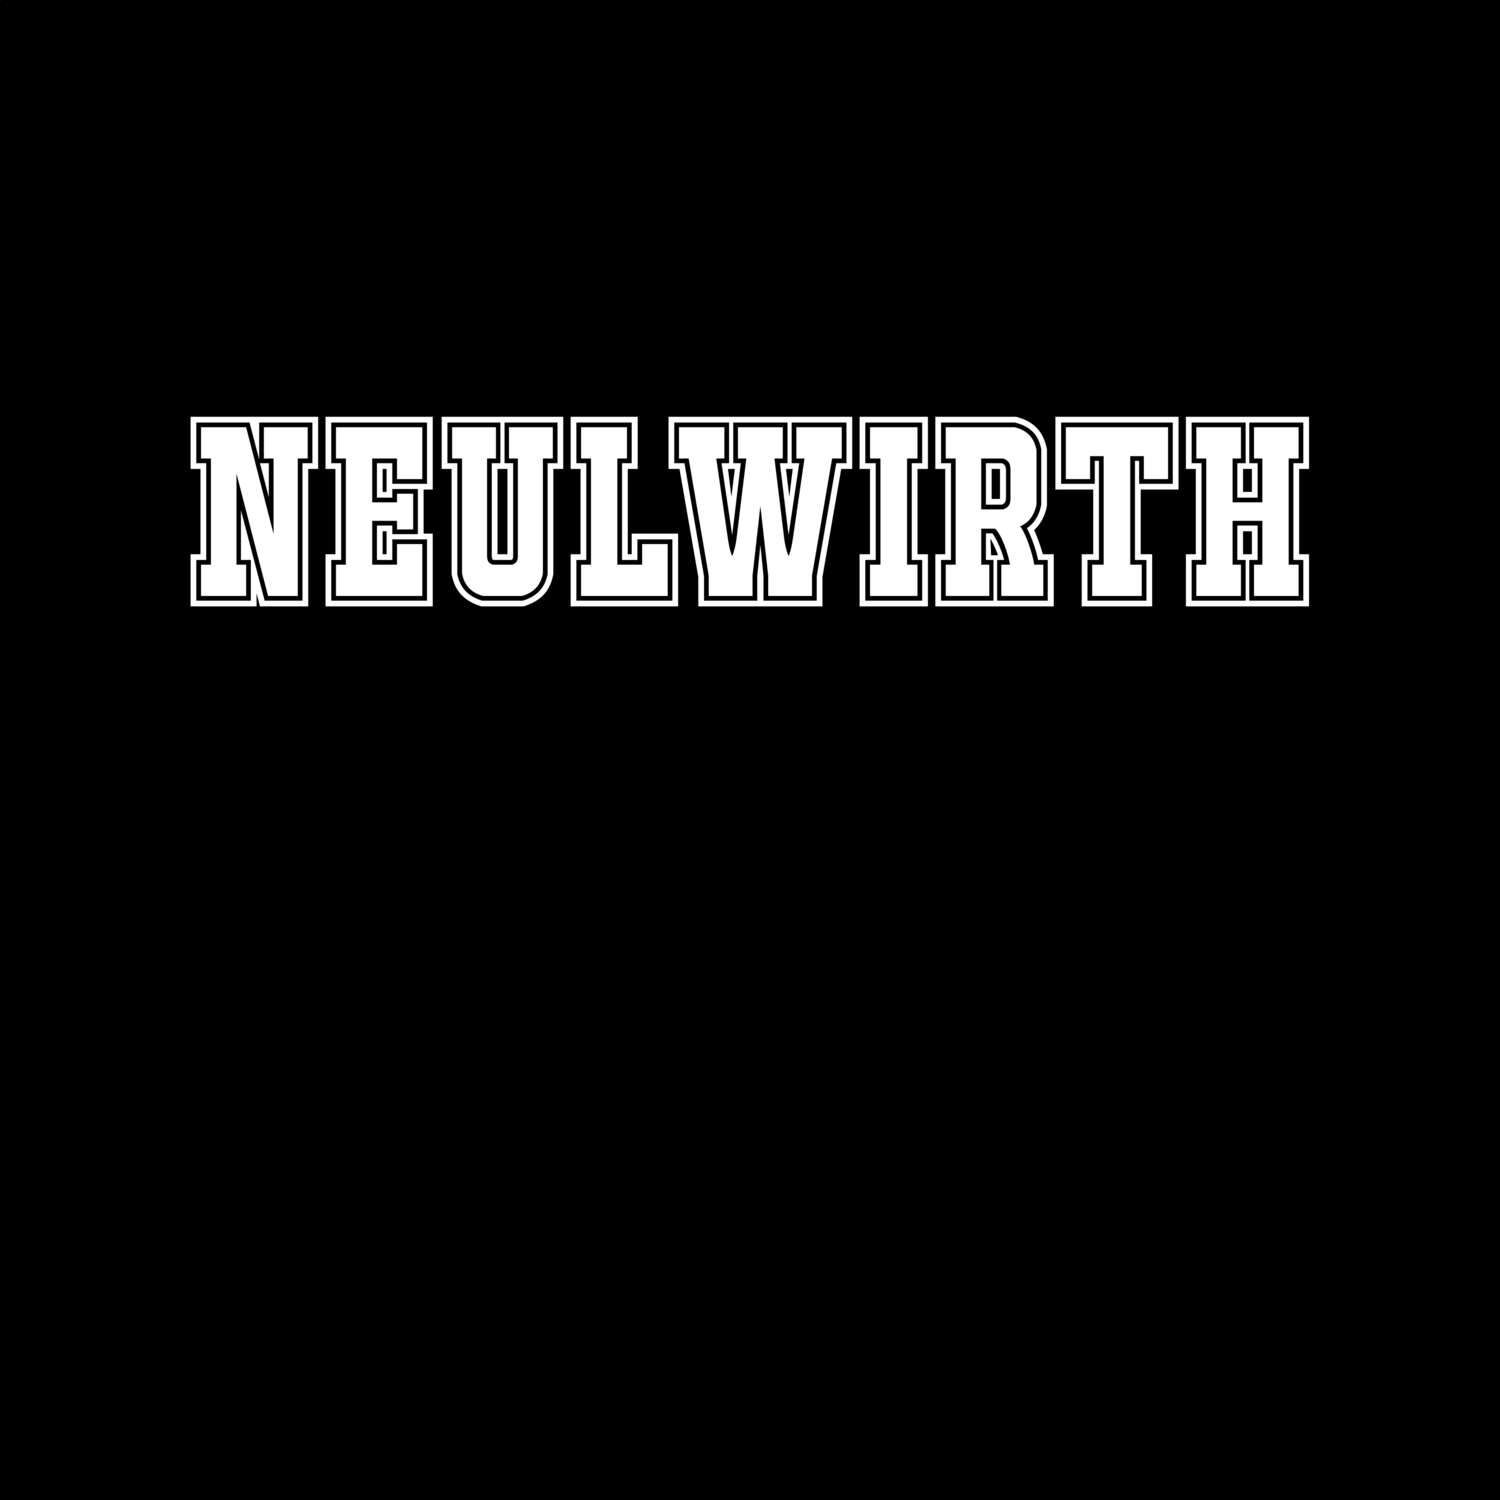 Neulwirth T-Shirt »Classic«